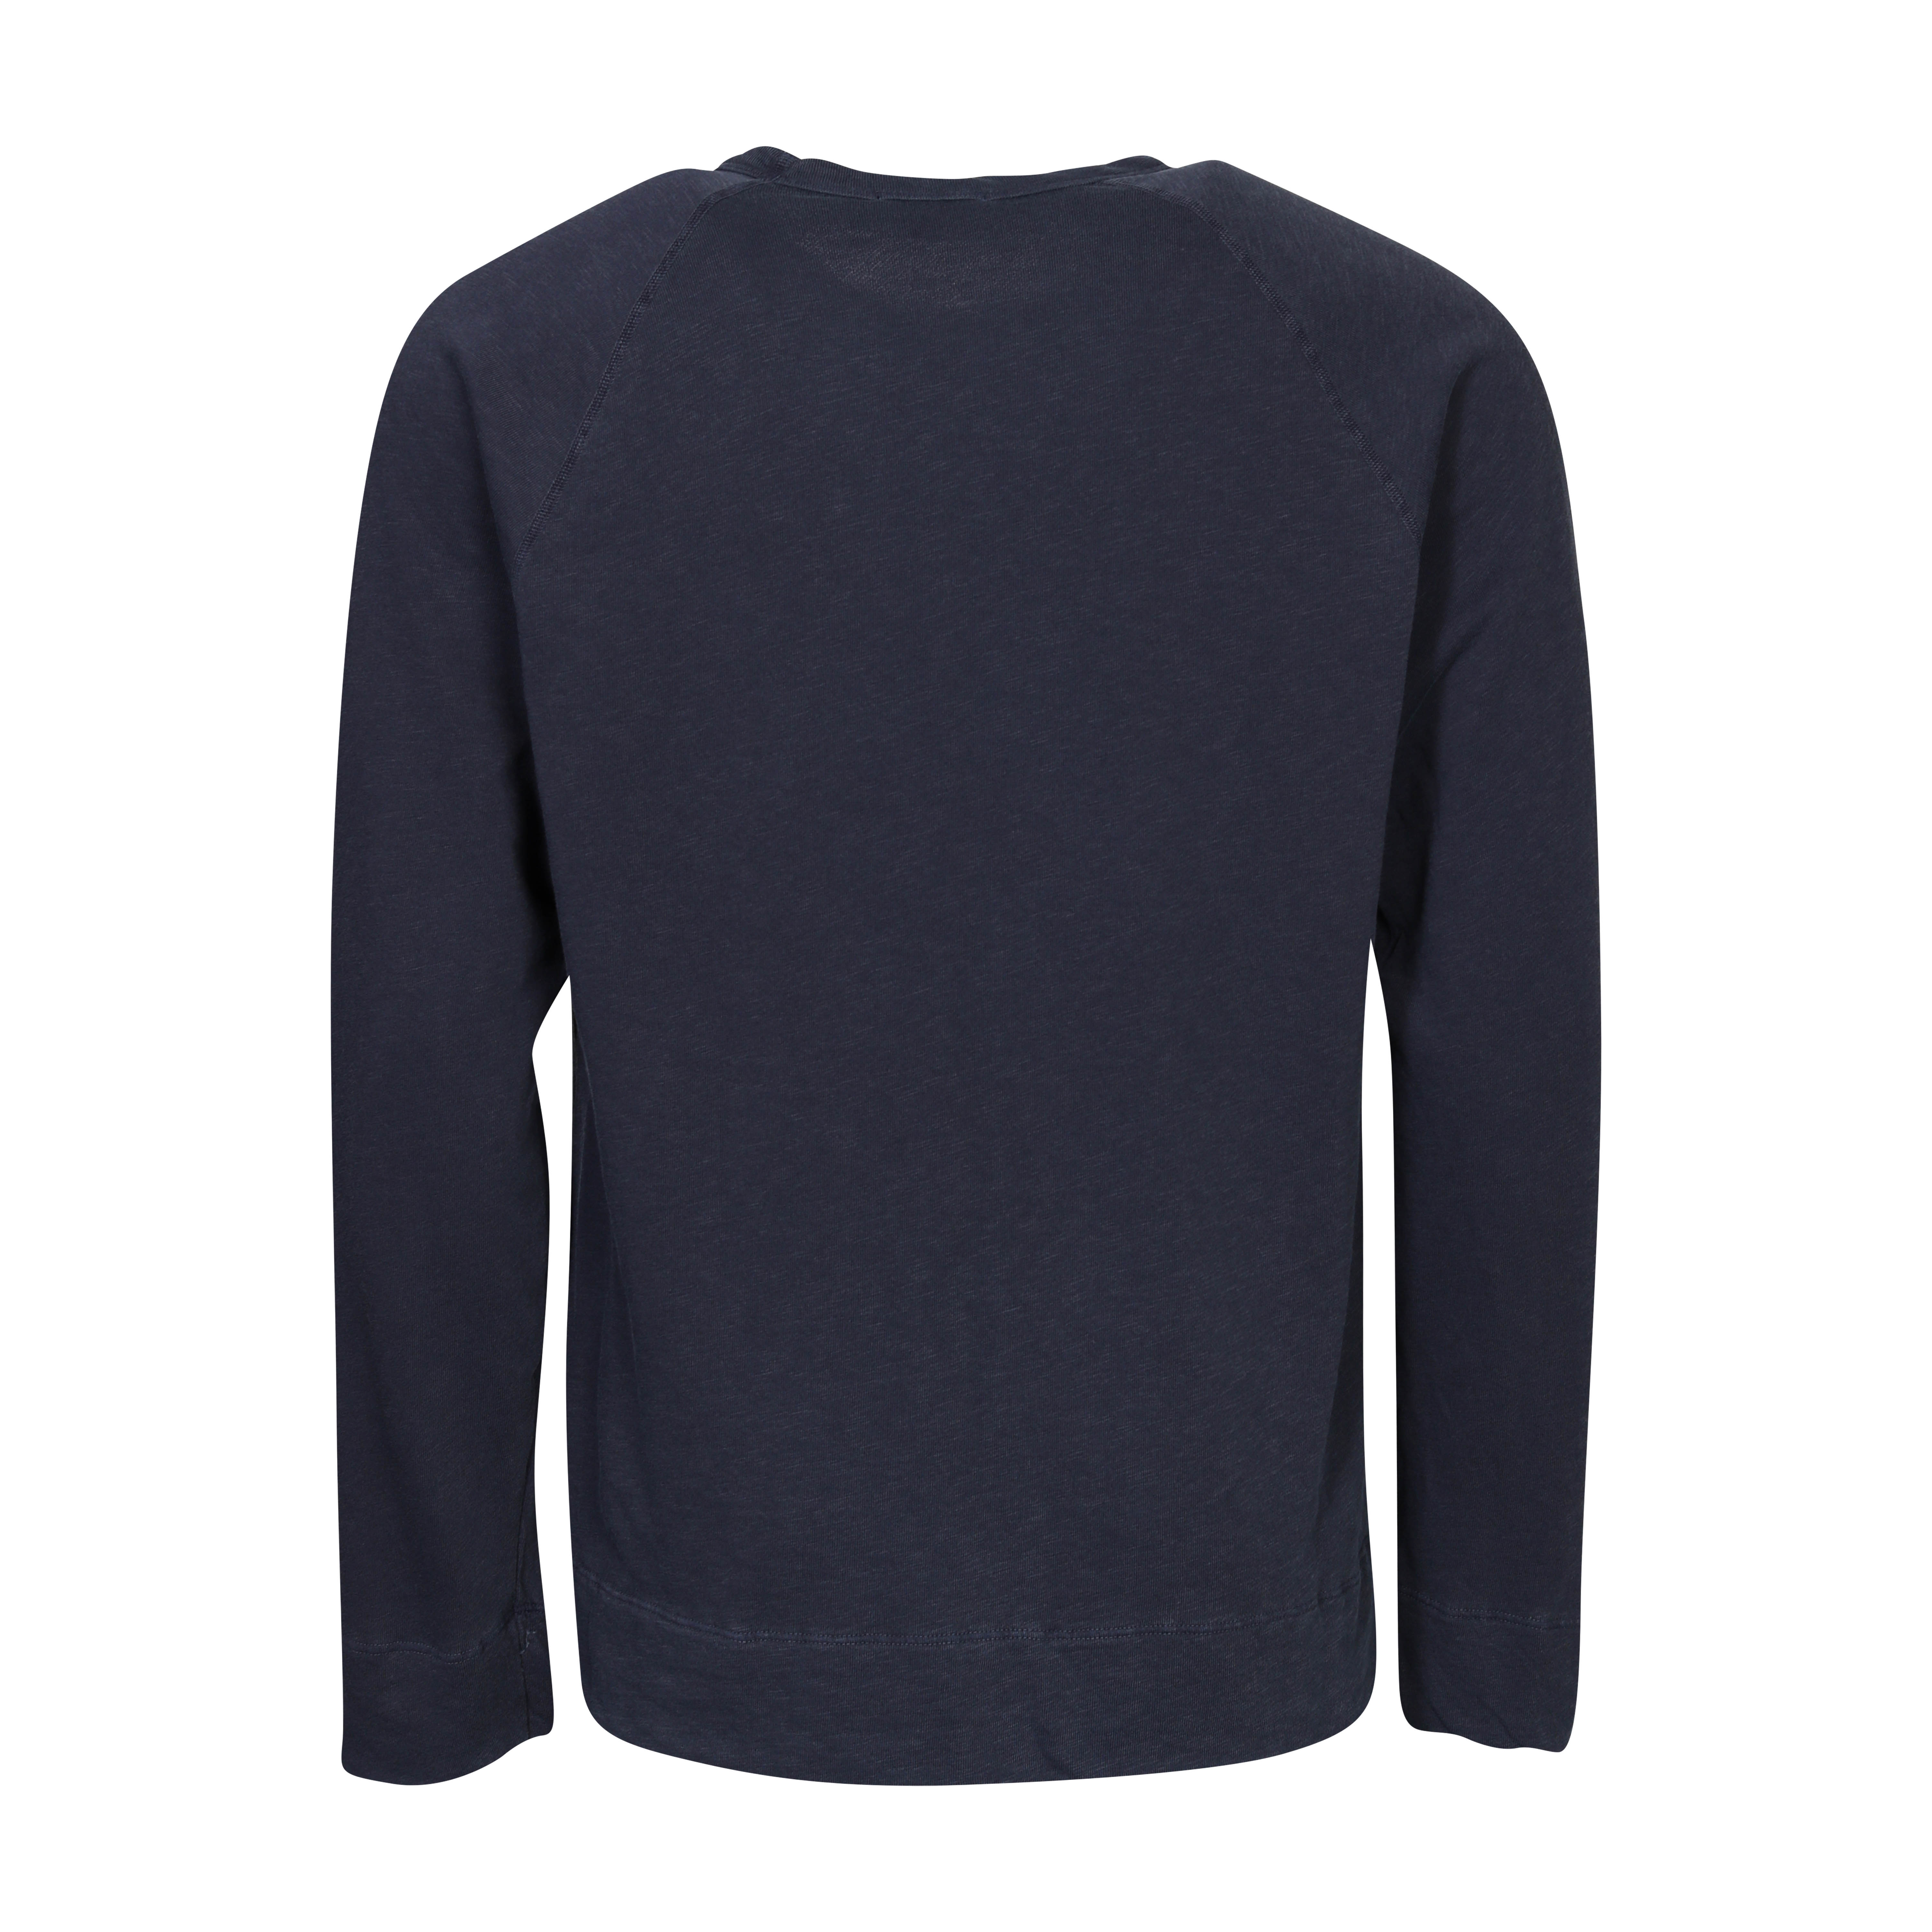 James Perse Vintage Cotton Raglan Sweater in Deep 1/S